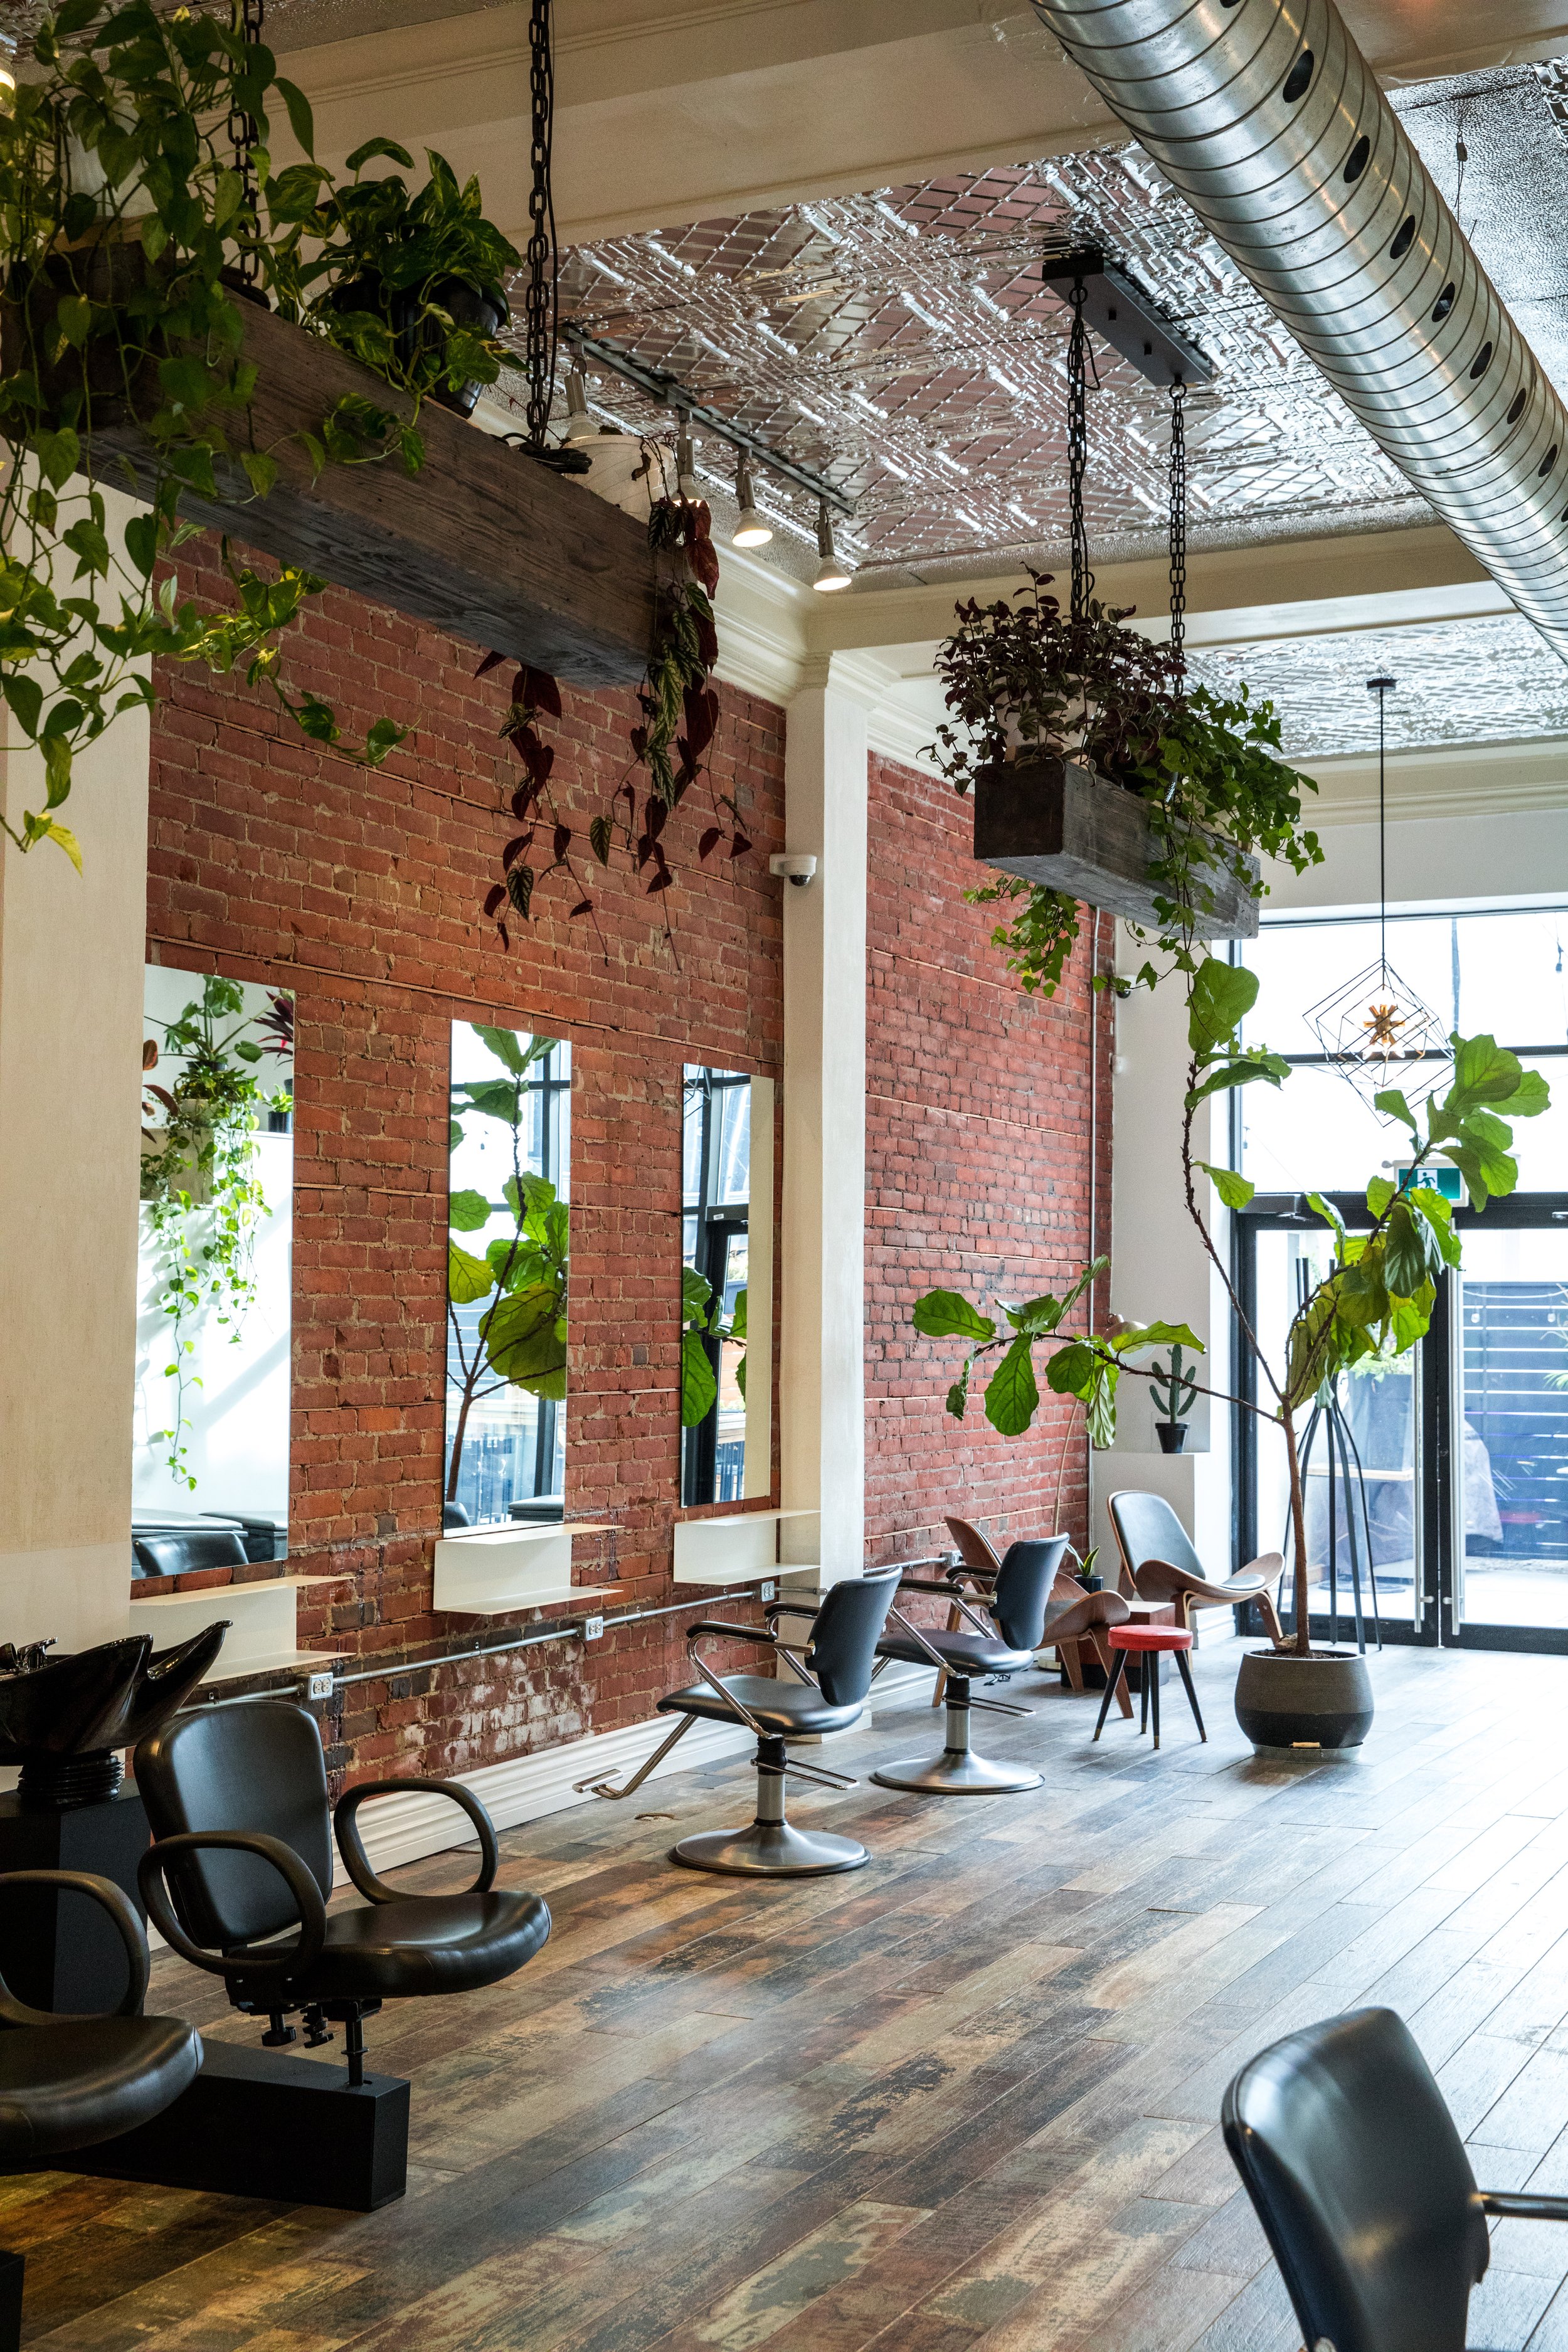 Modern hair salon with high ceilings and plants